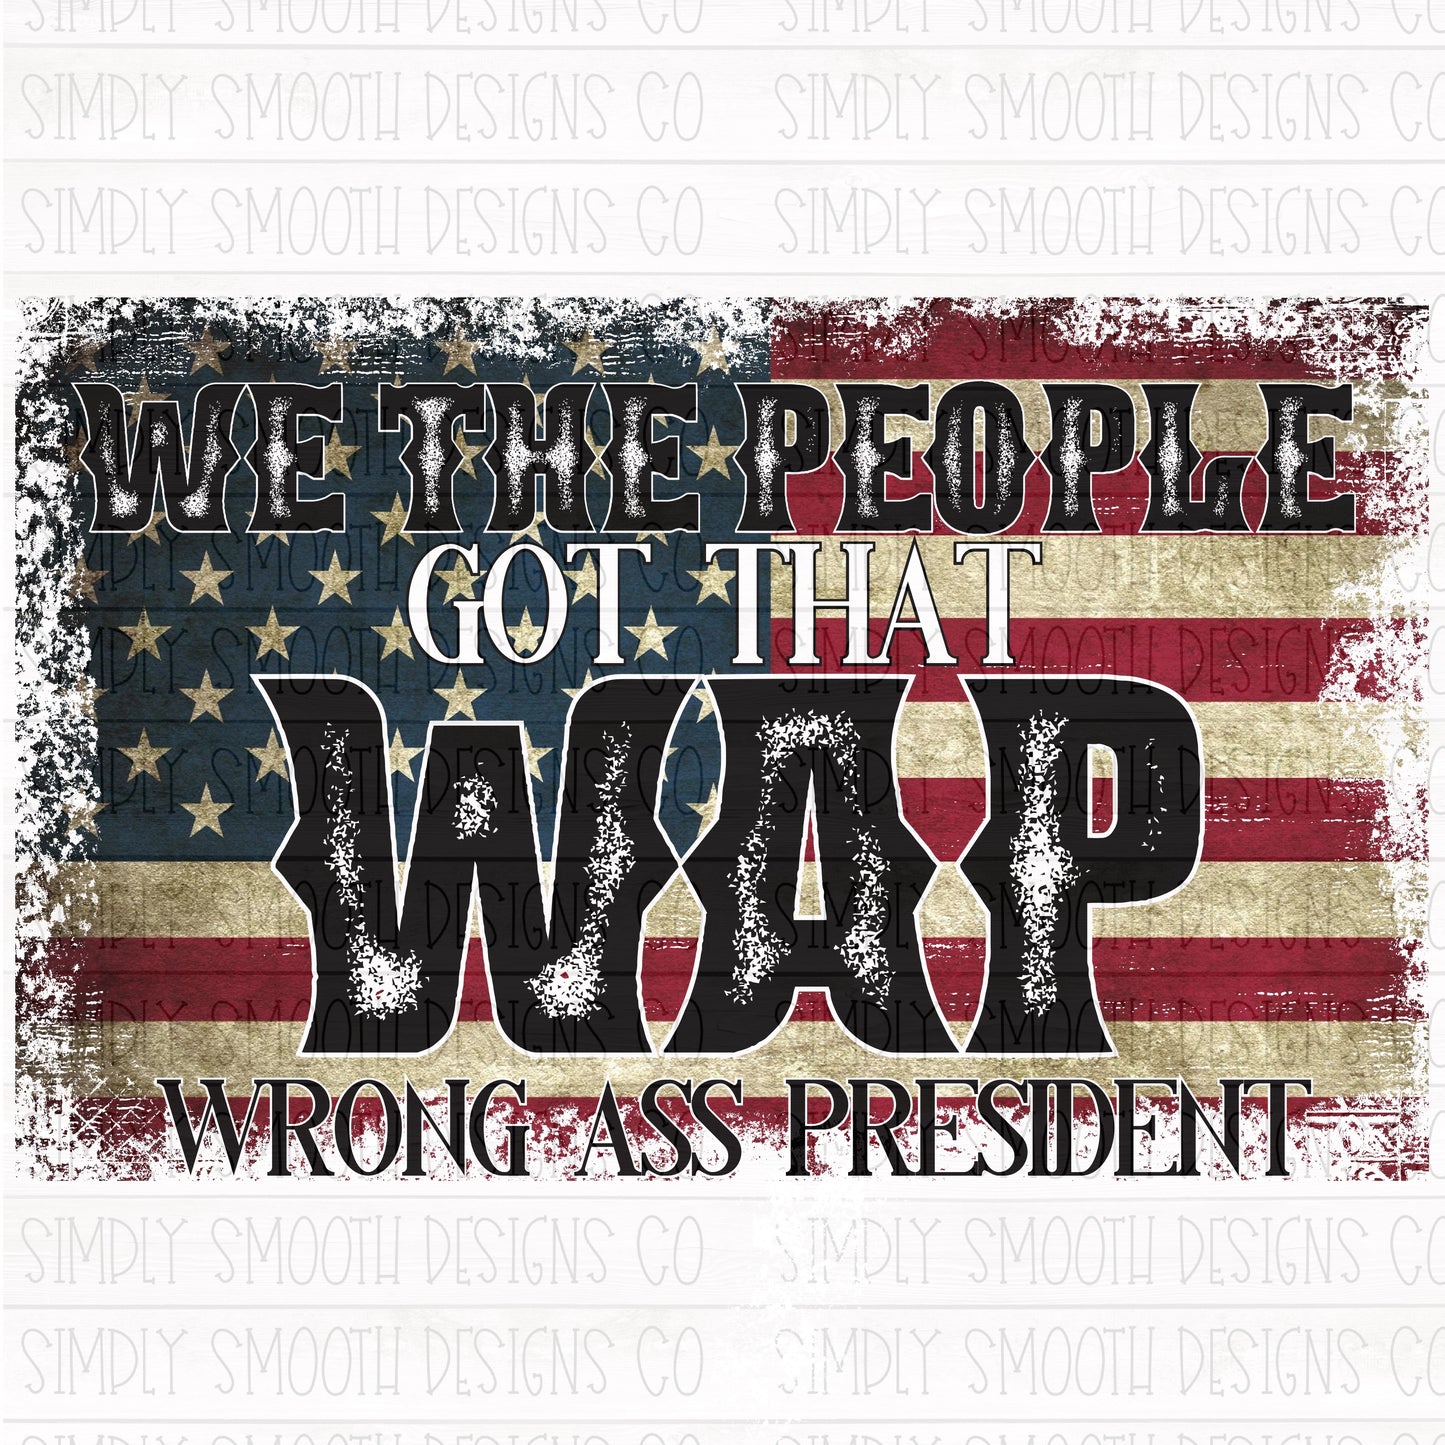 We the people got that wap